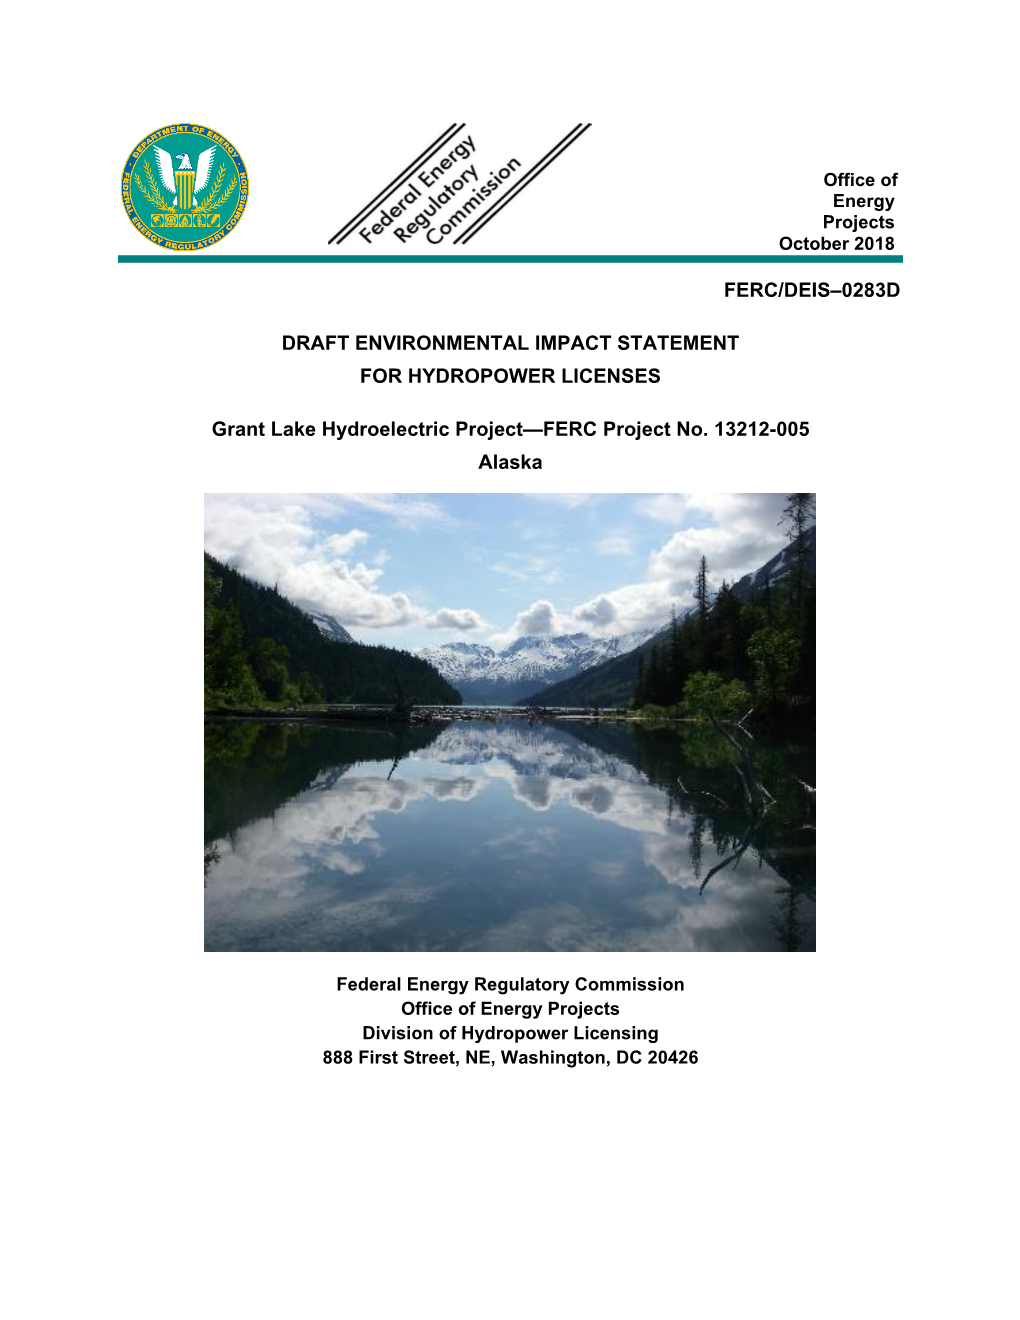 Grant Lake Hydroelectric Project—FERC Project No